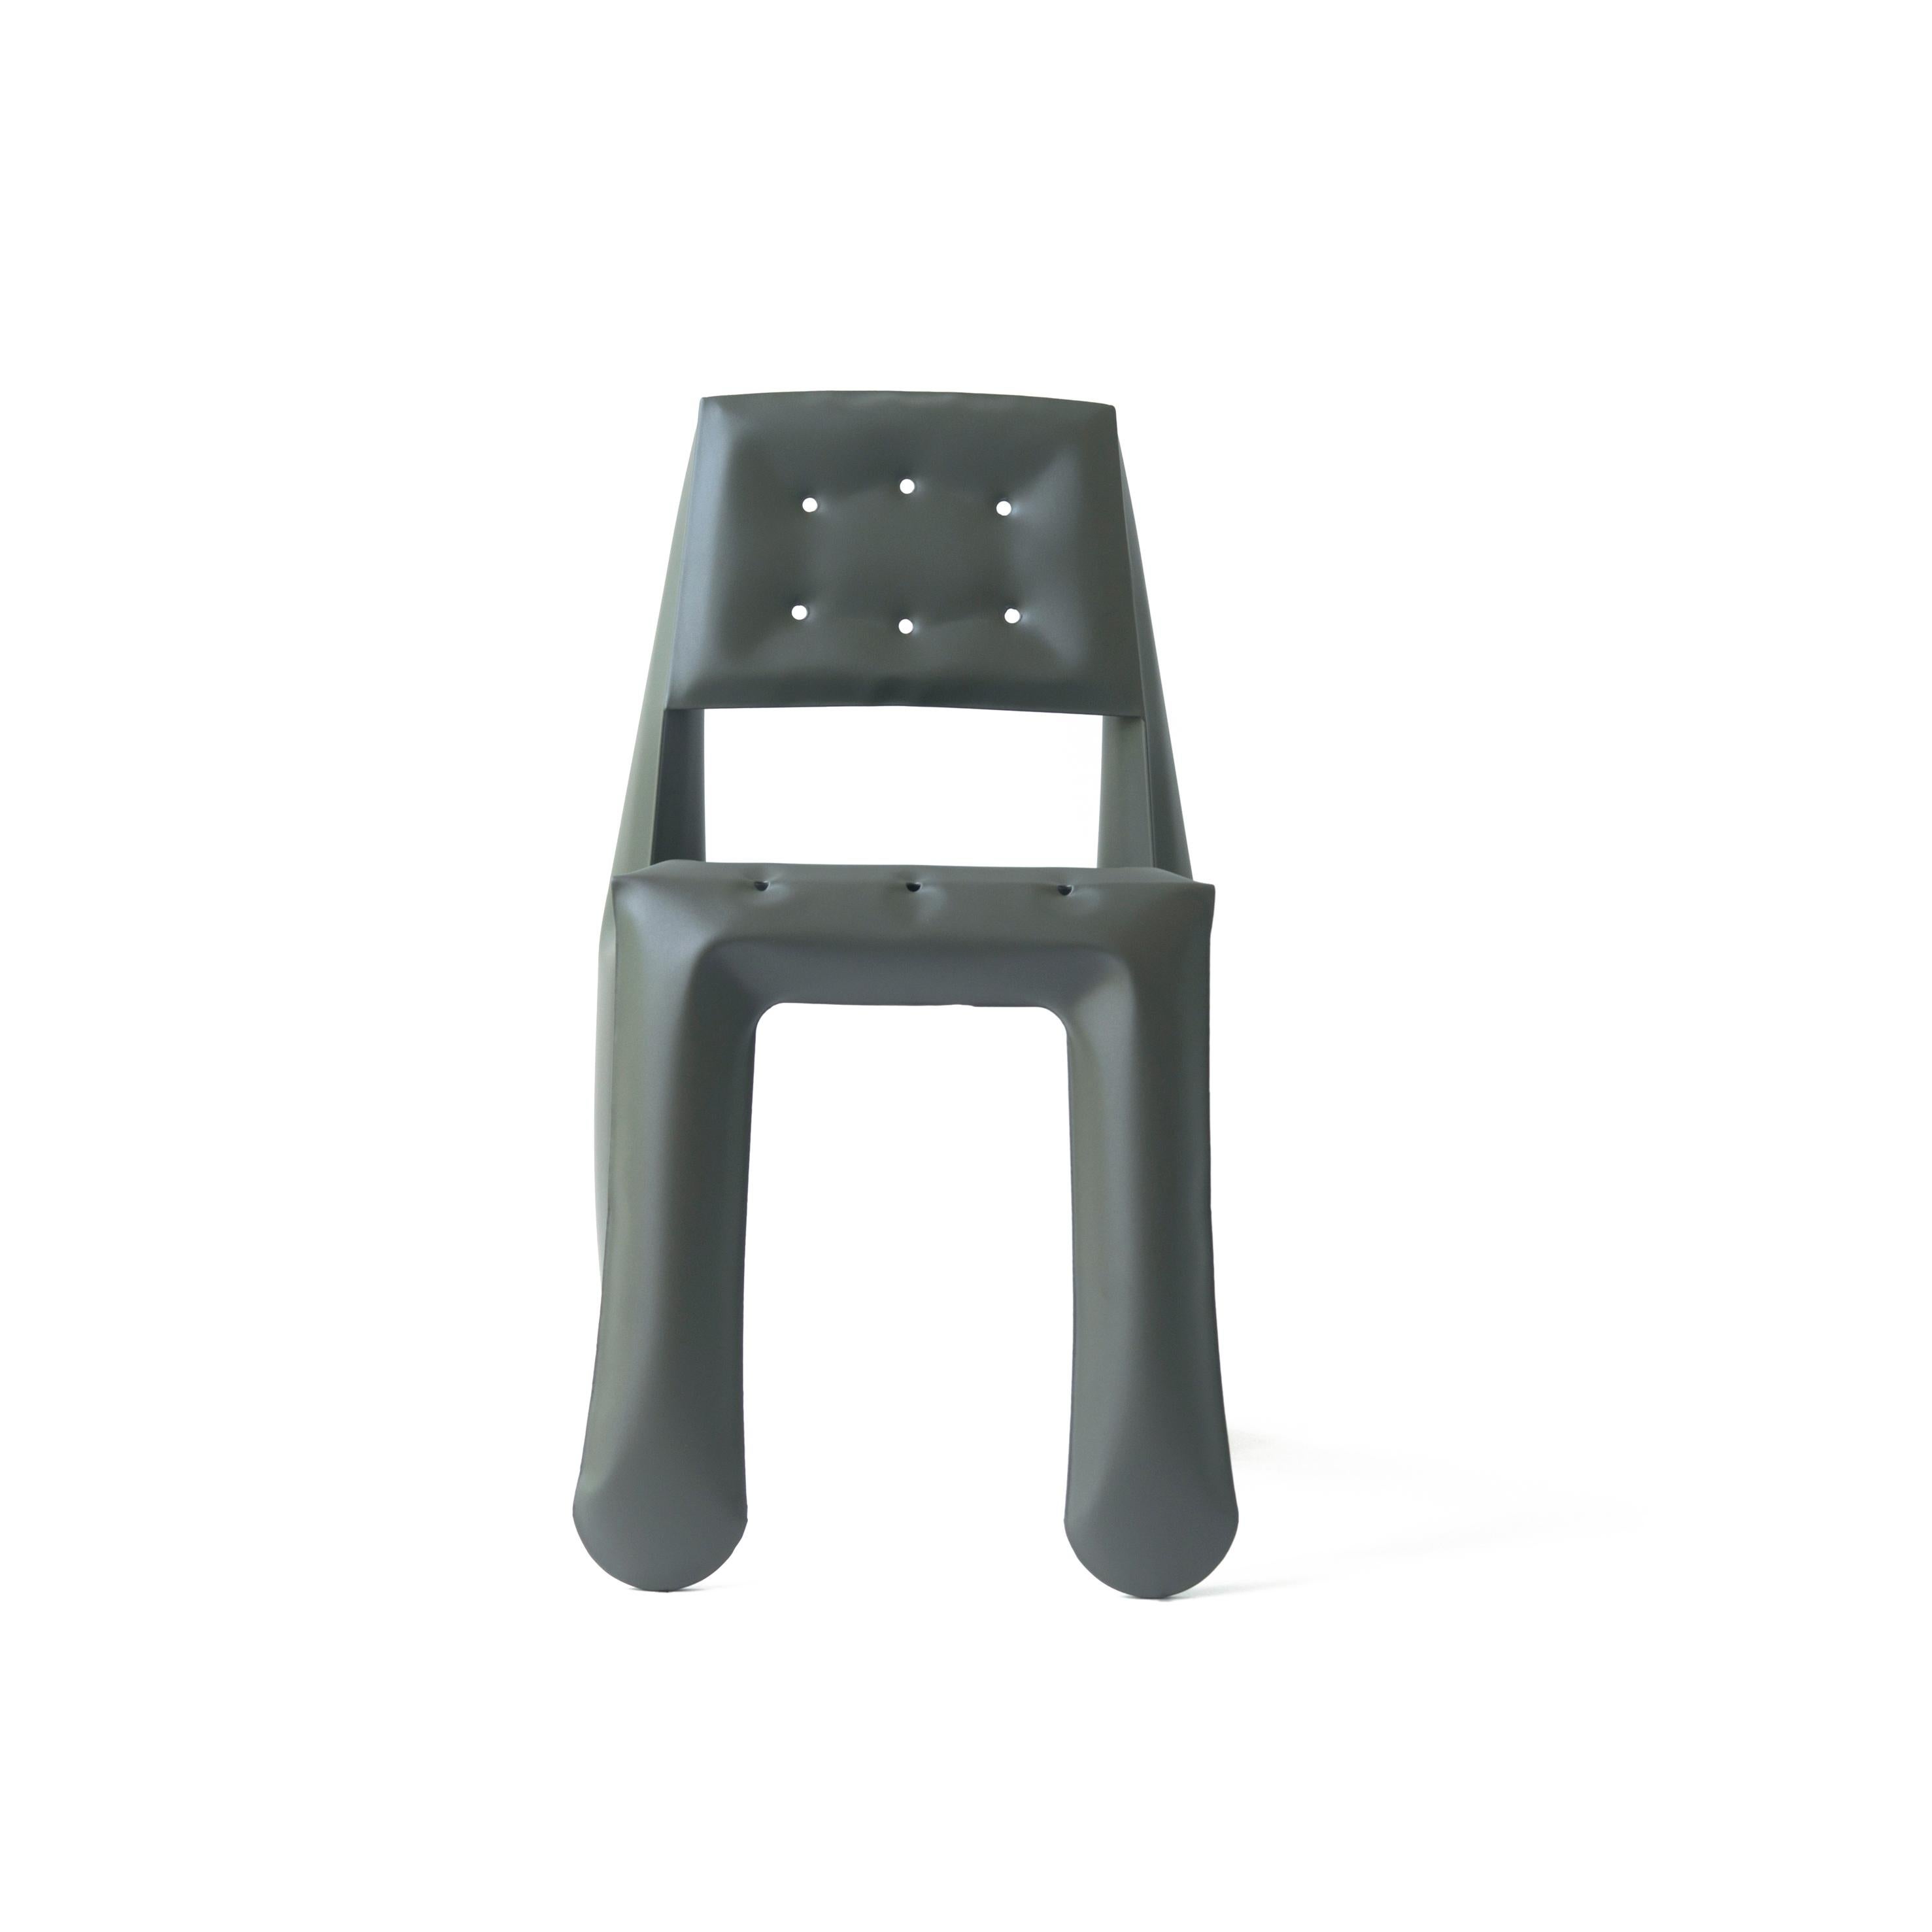 Polish Umbra Grey Carbon Steel Chippensteel 0.5 Sculptural Chair by Zieta For Sale